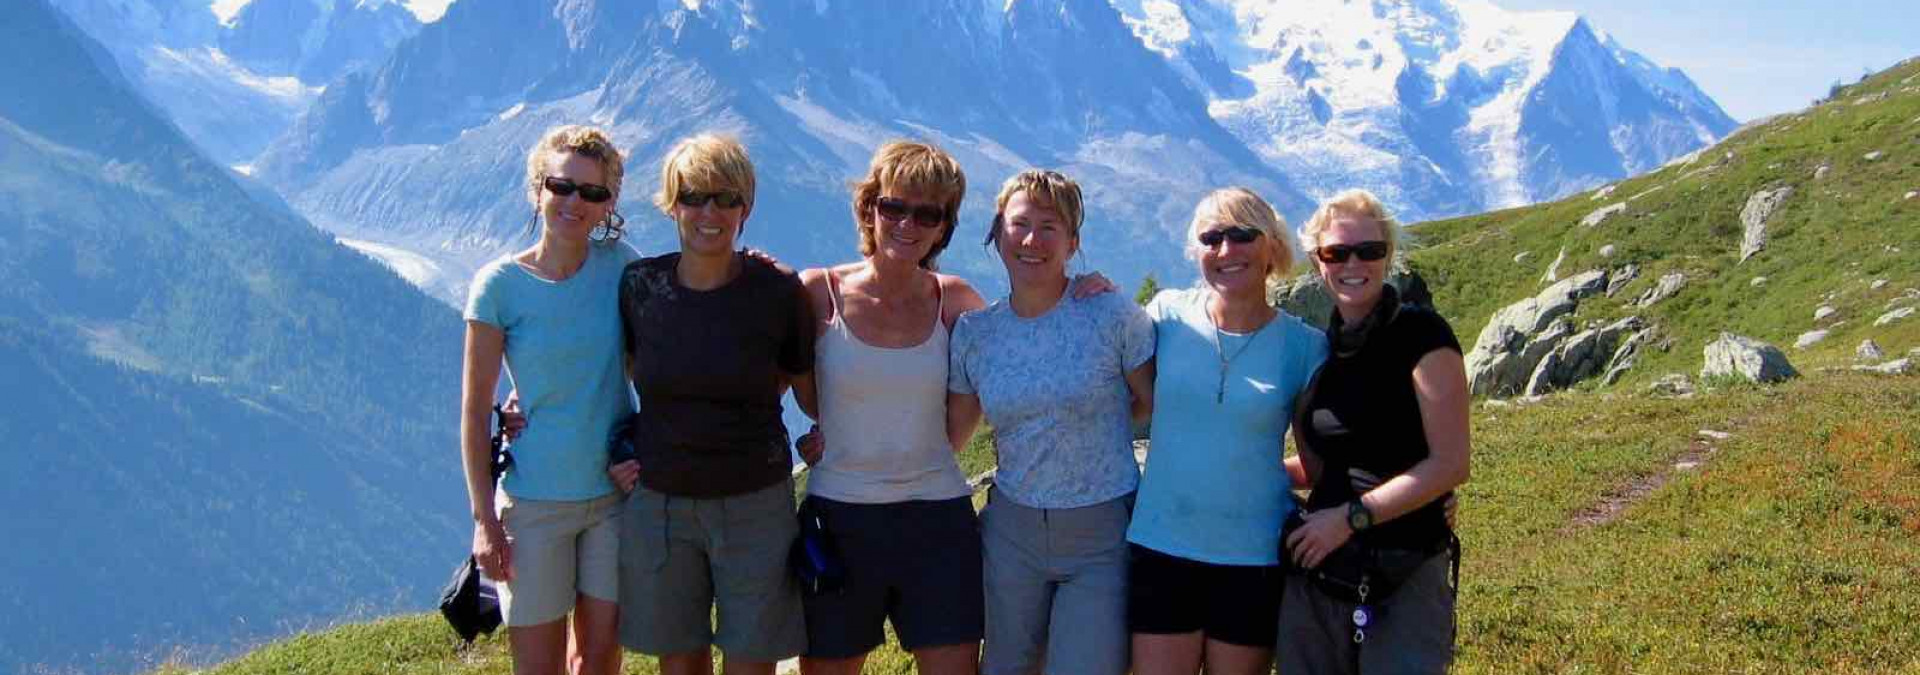 Tour du Mont Blanc Highlights